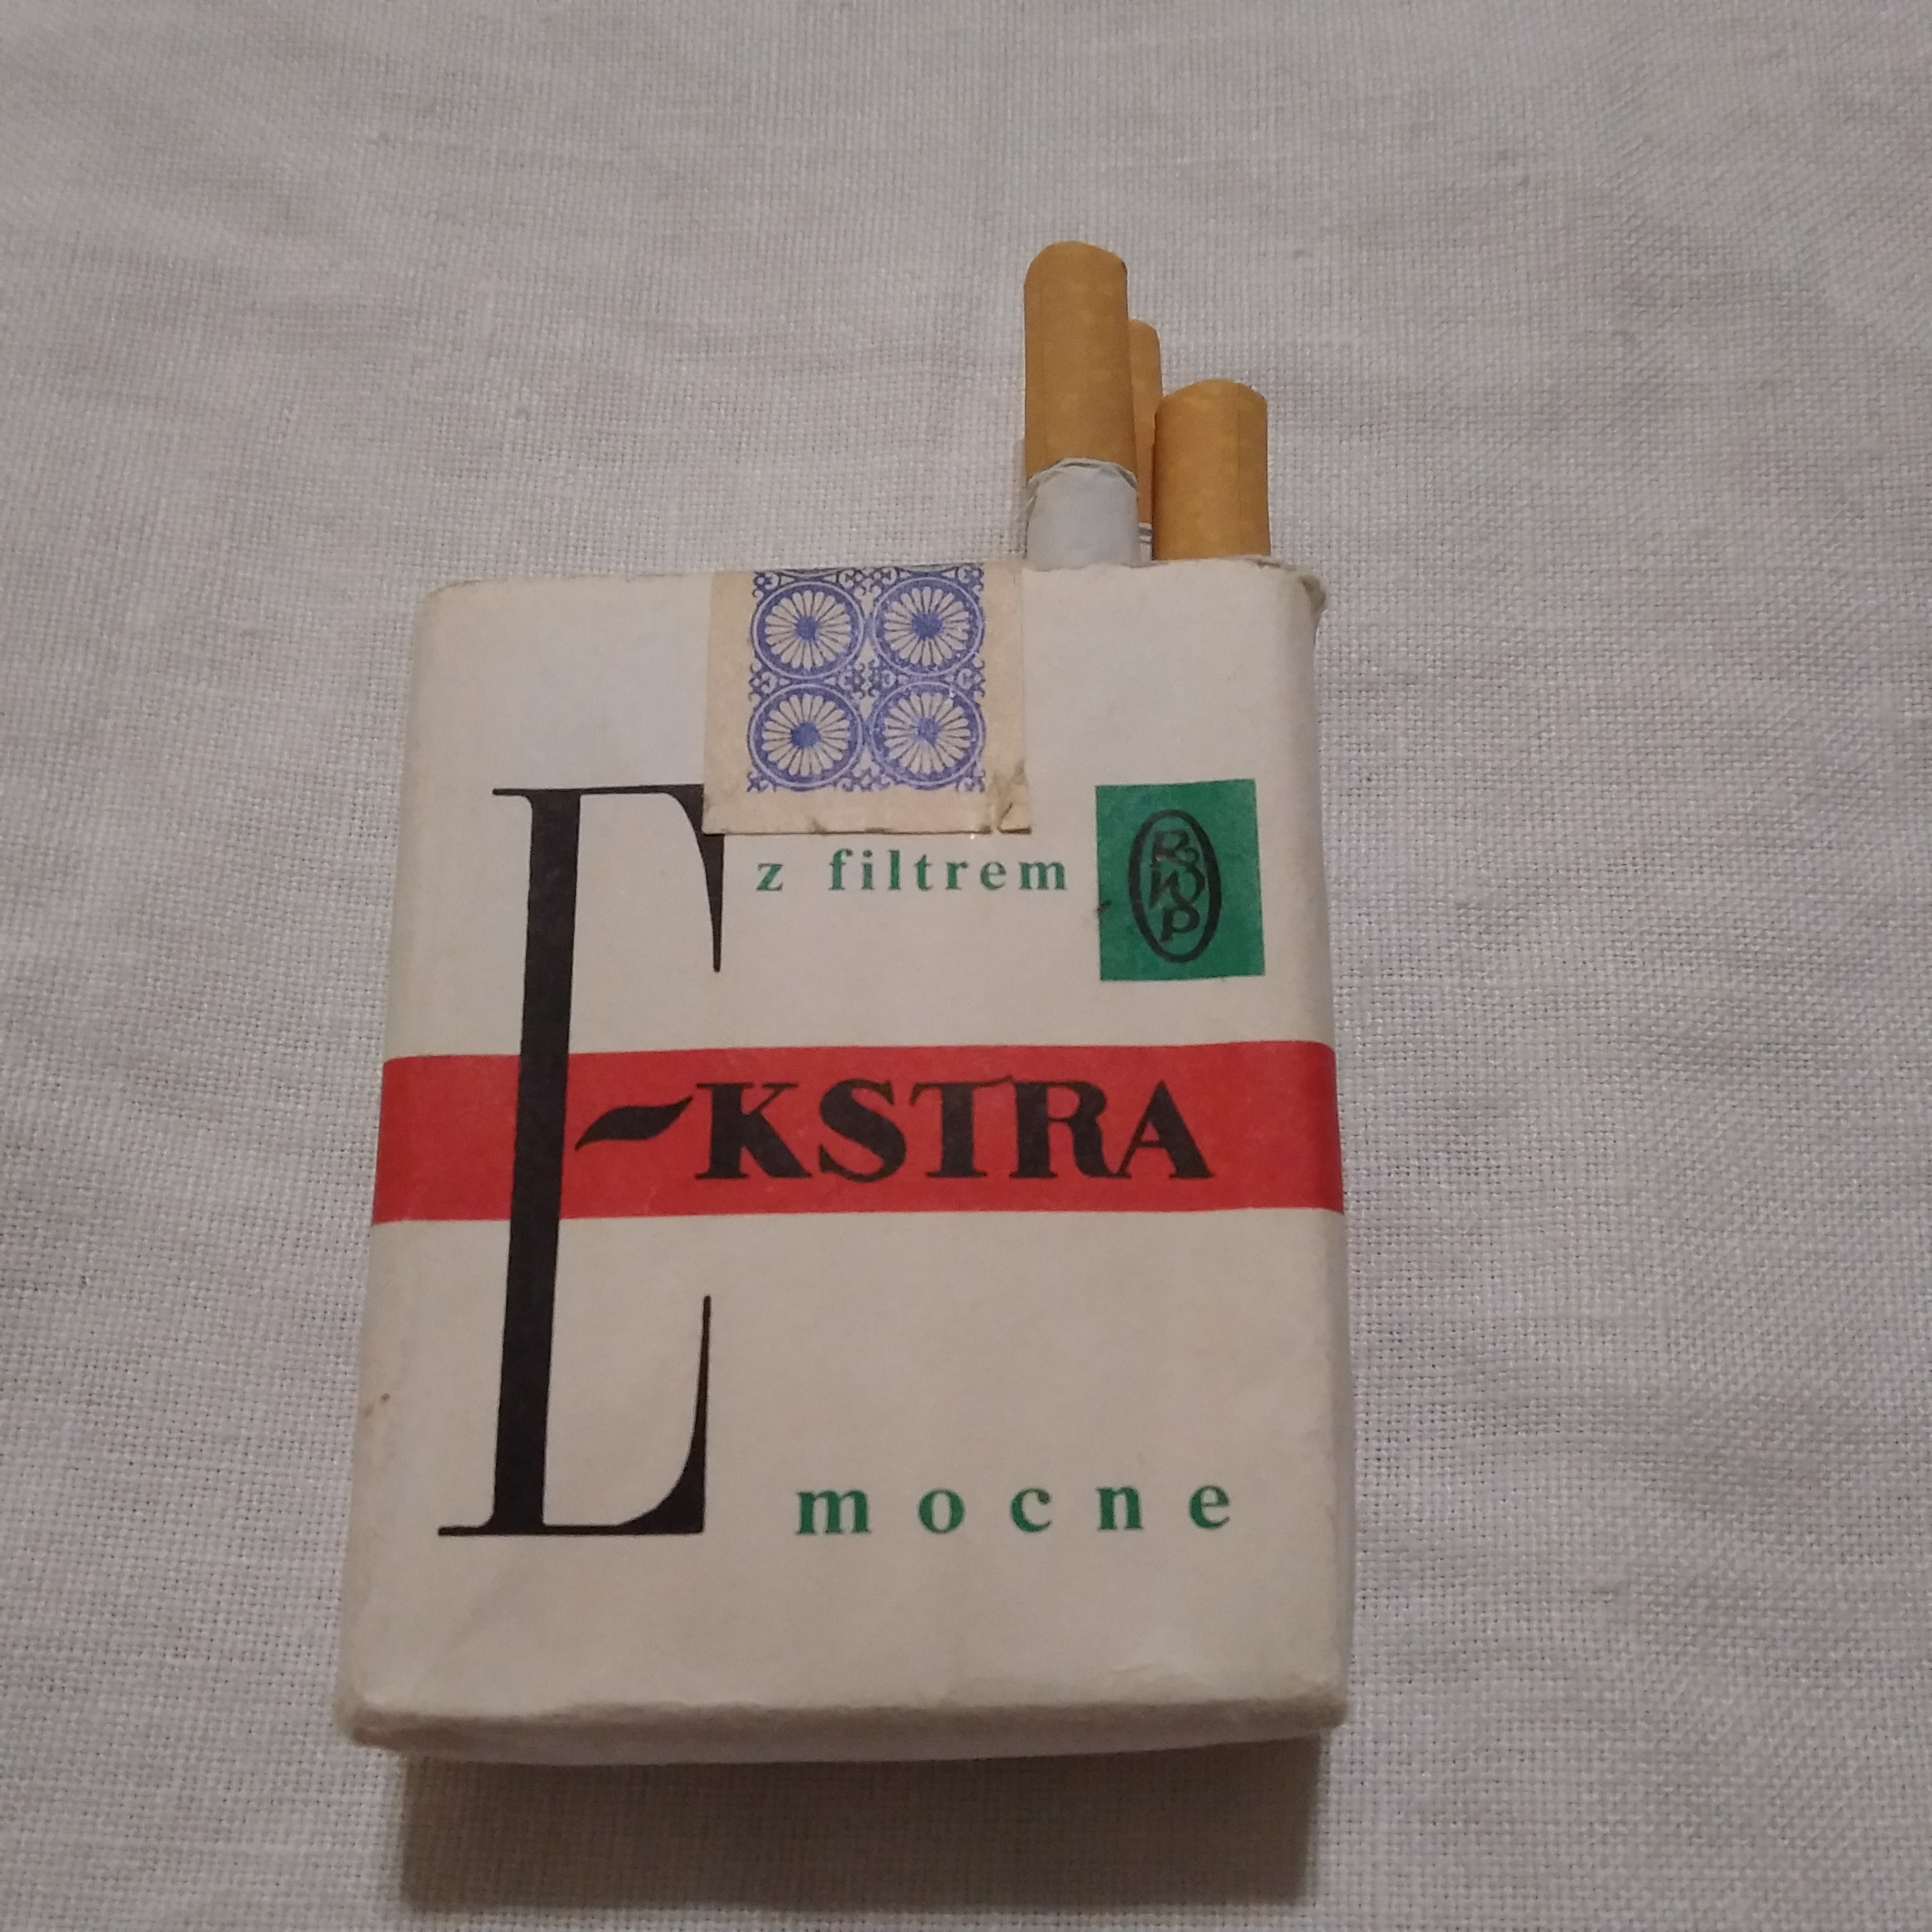 papierosy ekstra mocne 3.jpg